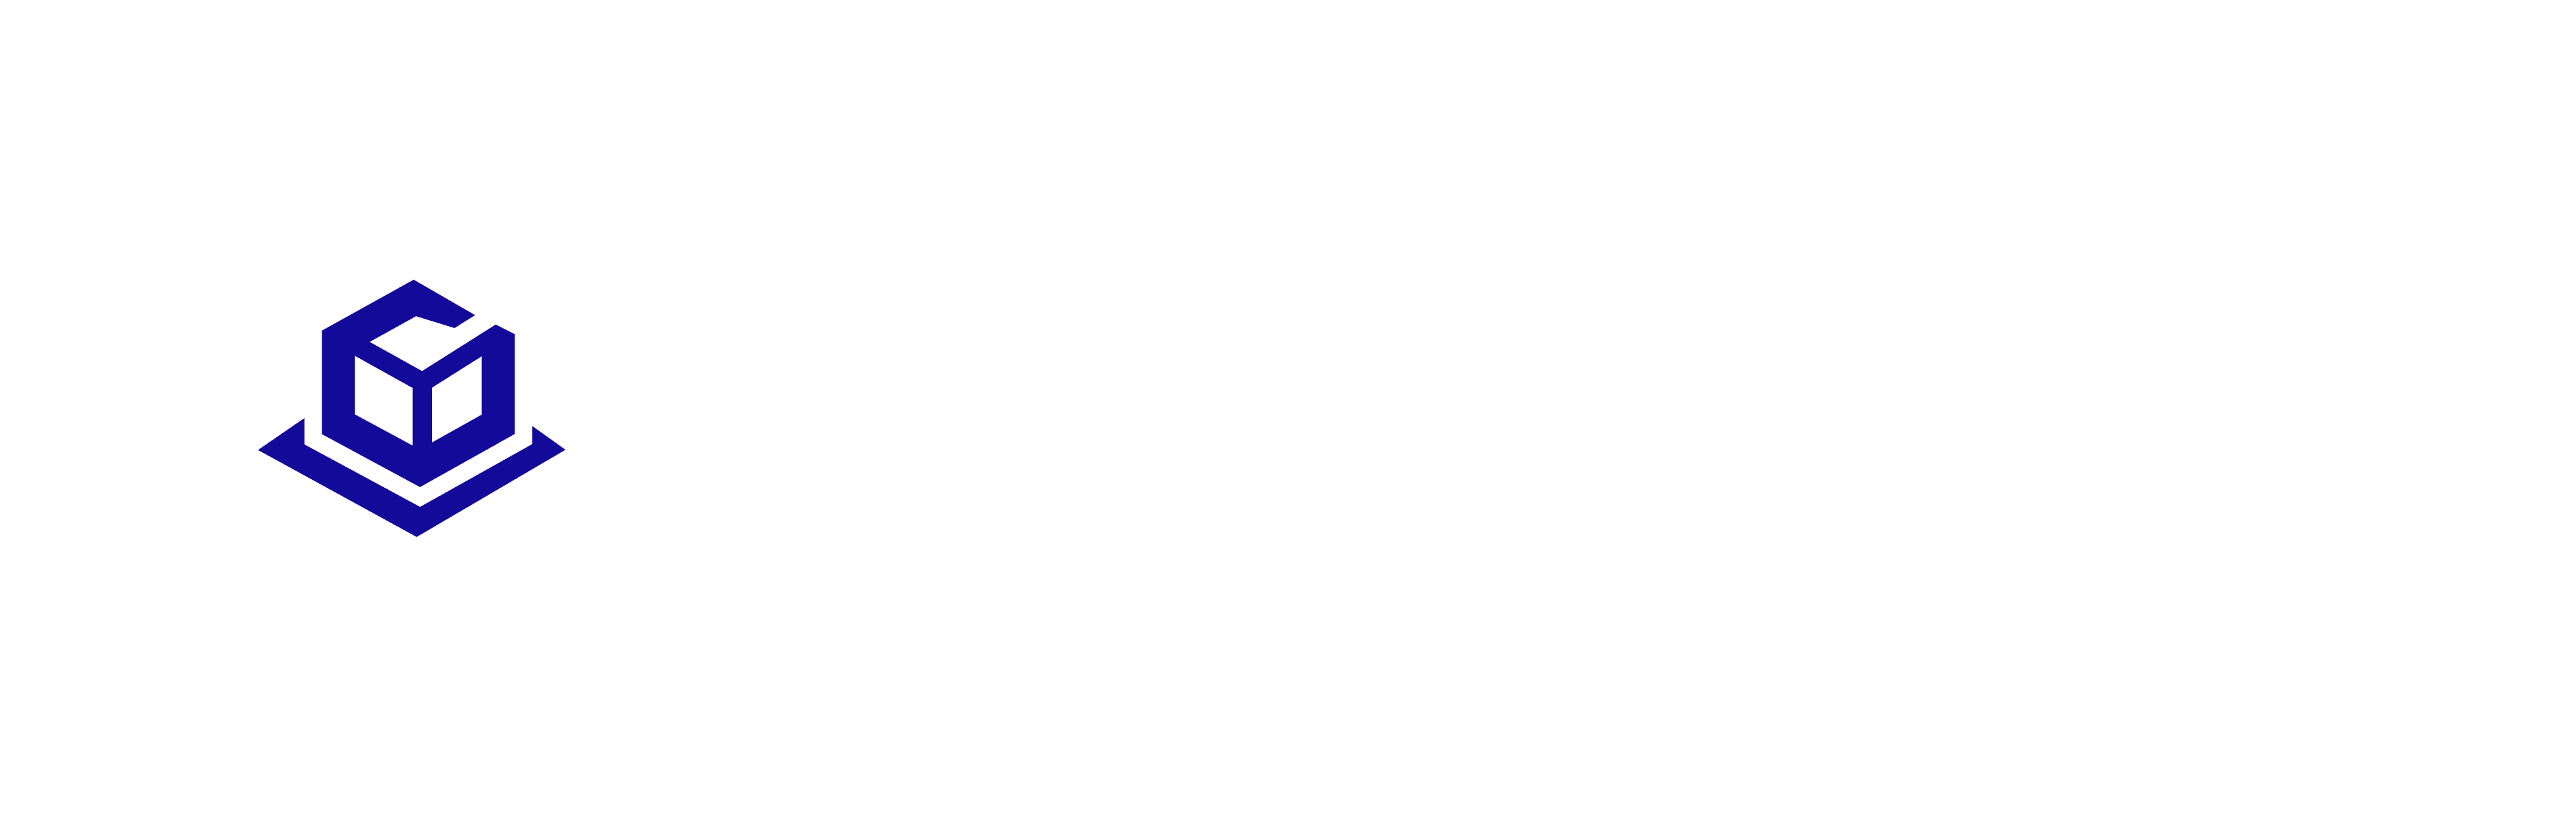 Smart Construction AR